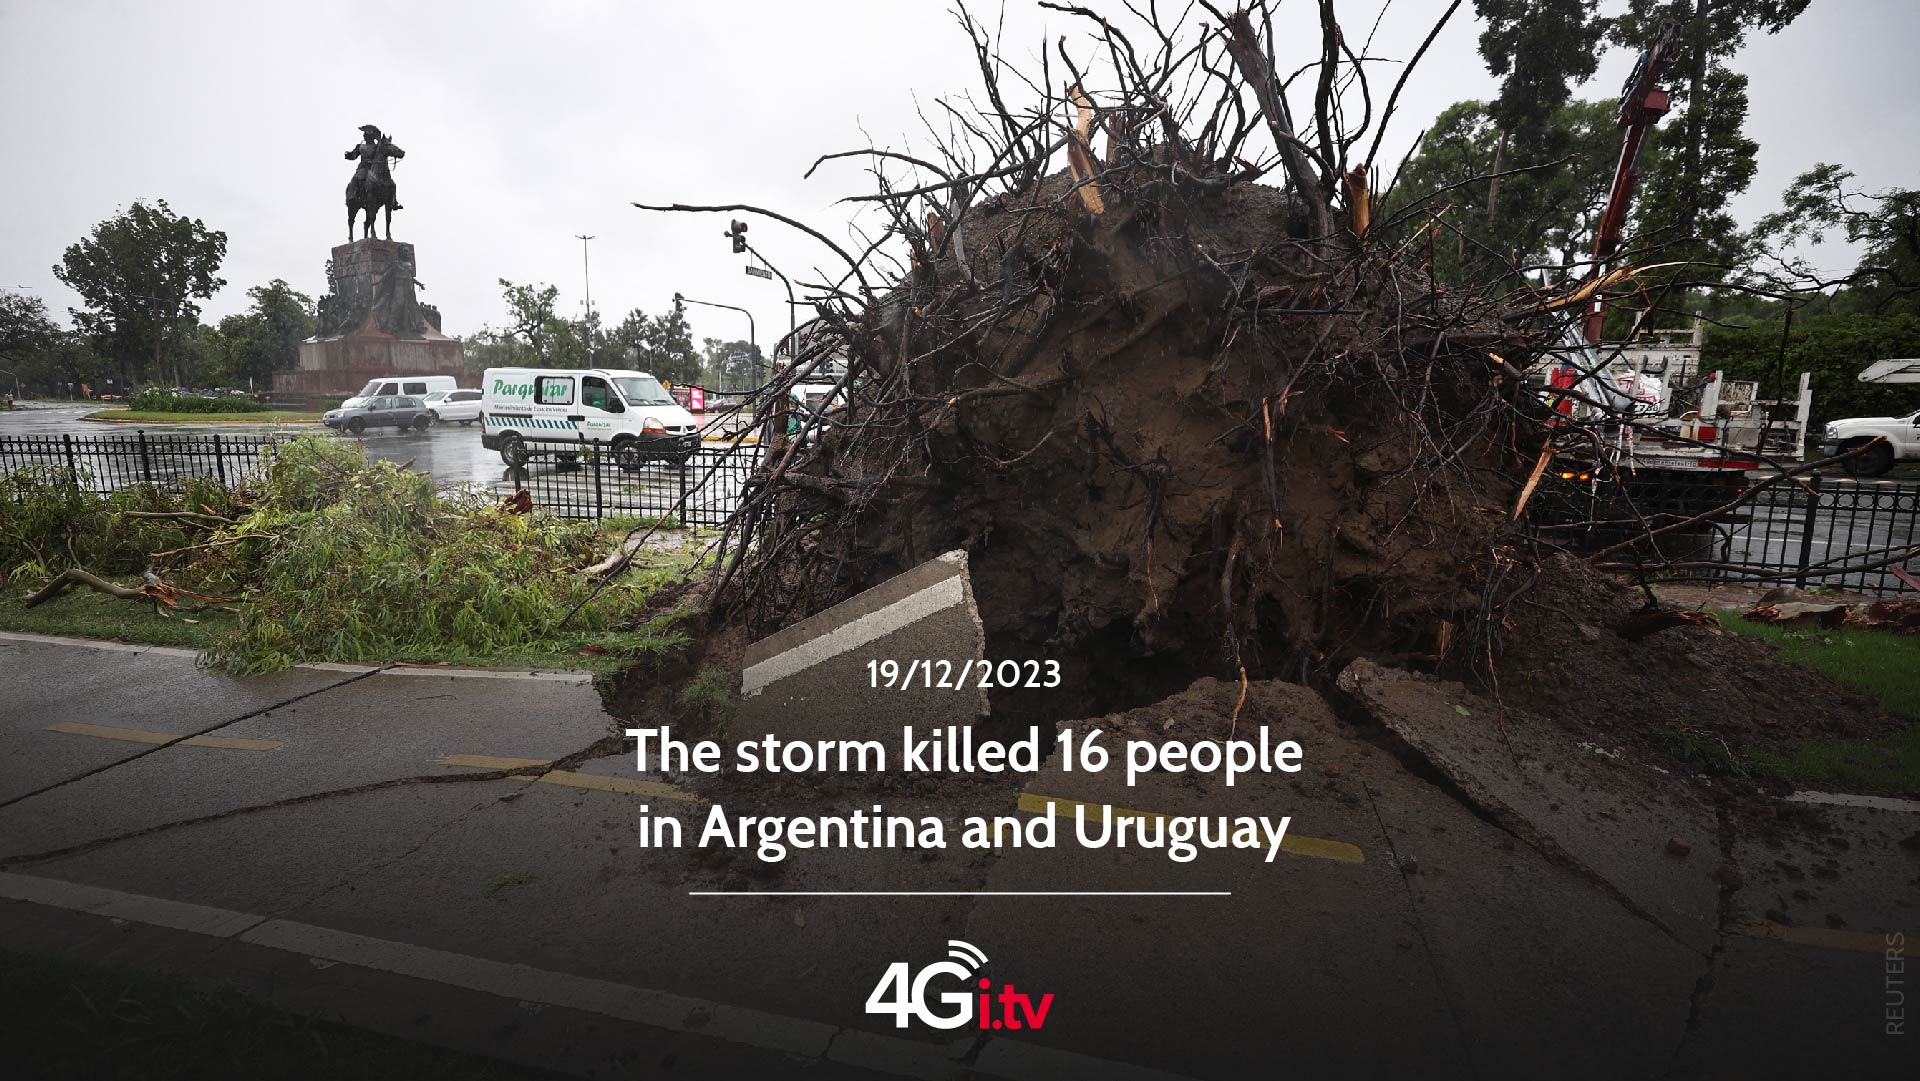 Подробнее о статье A storm killed 16 people in Argentina and Uruguay